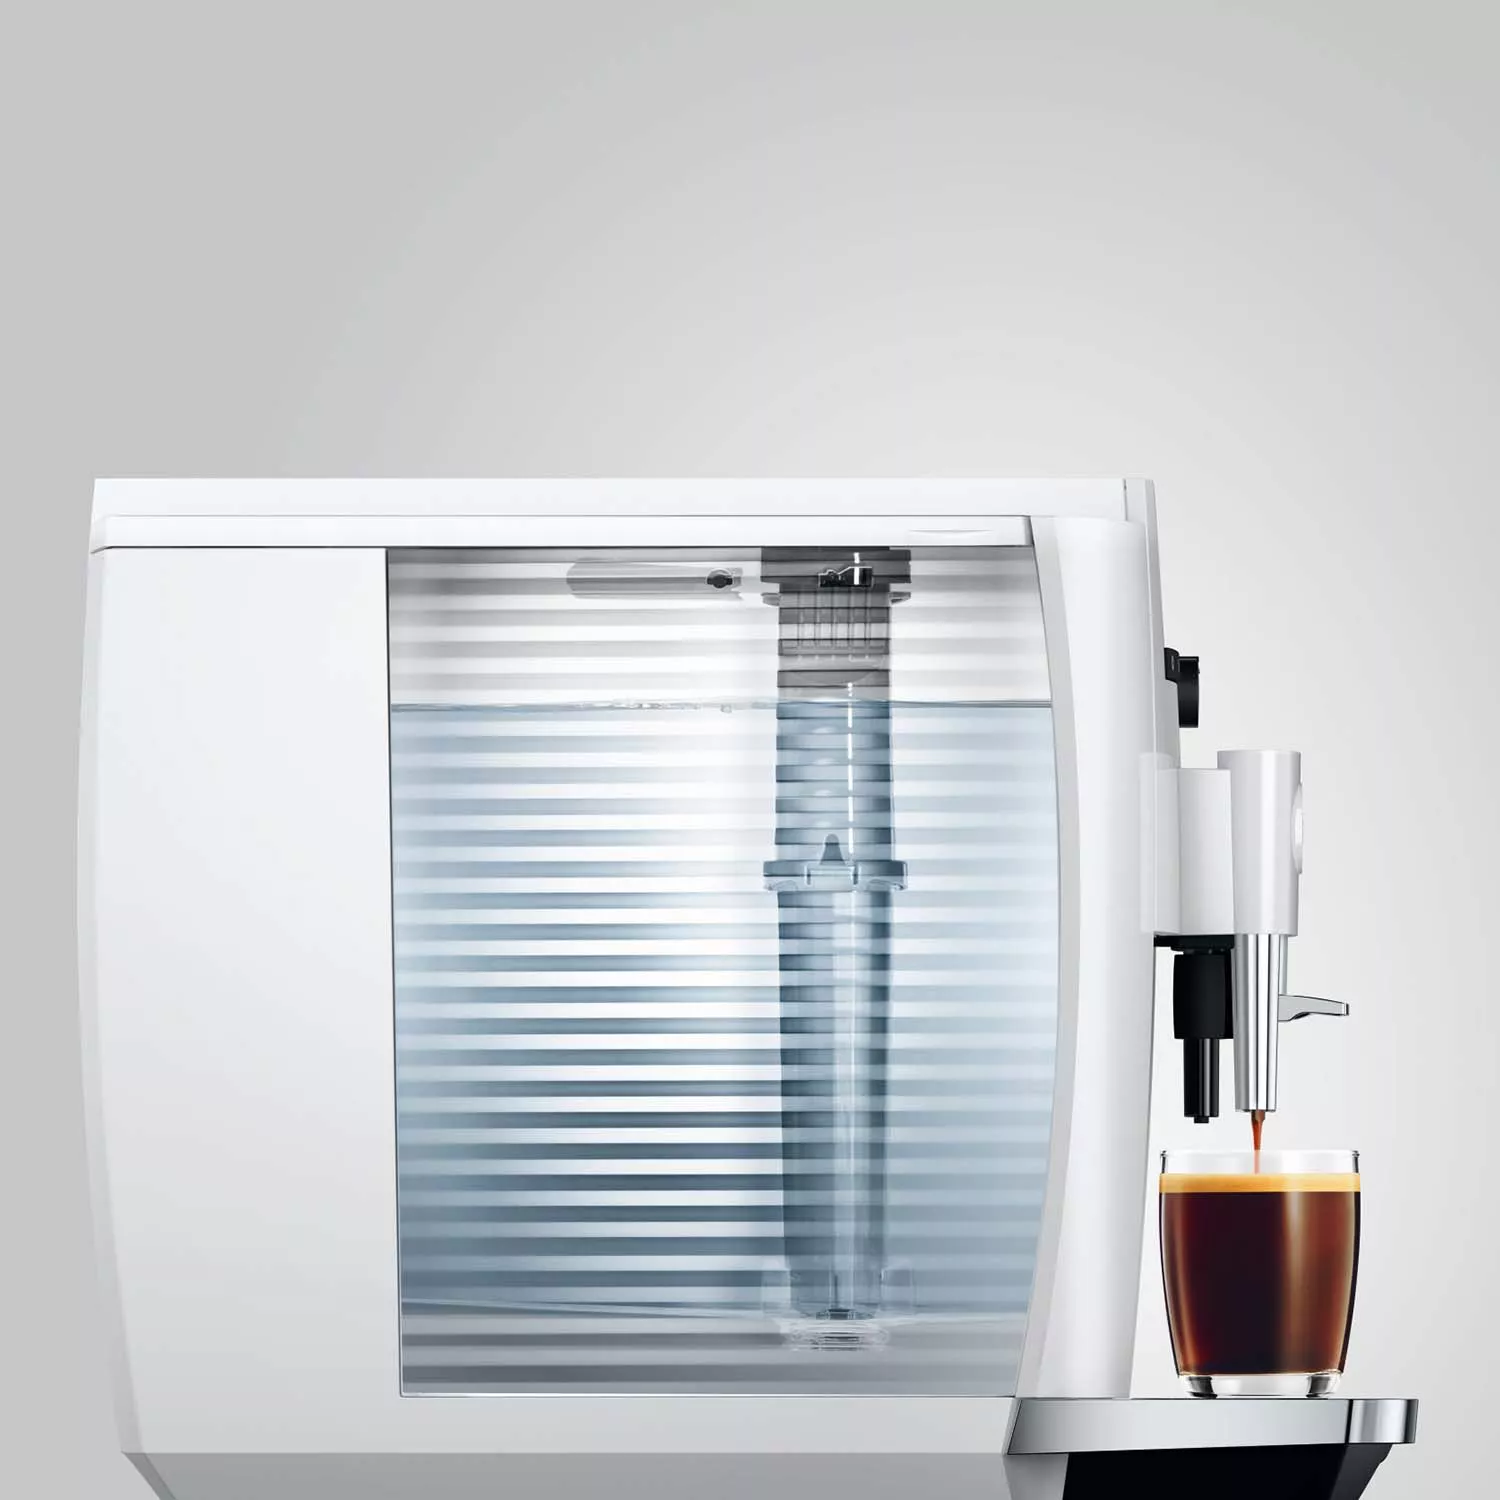 JURA E4 Automatic Coffee Machine